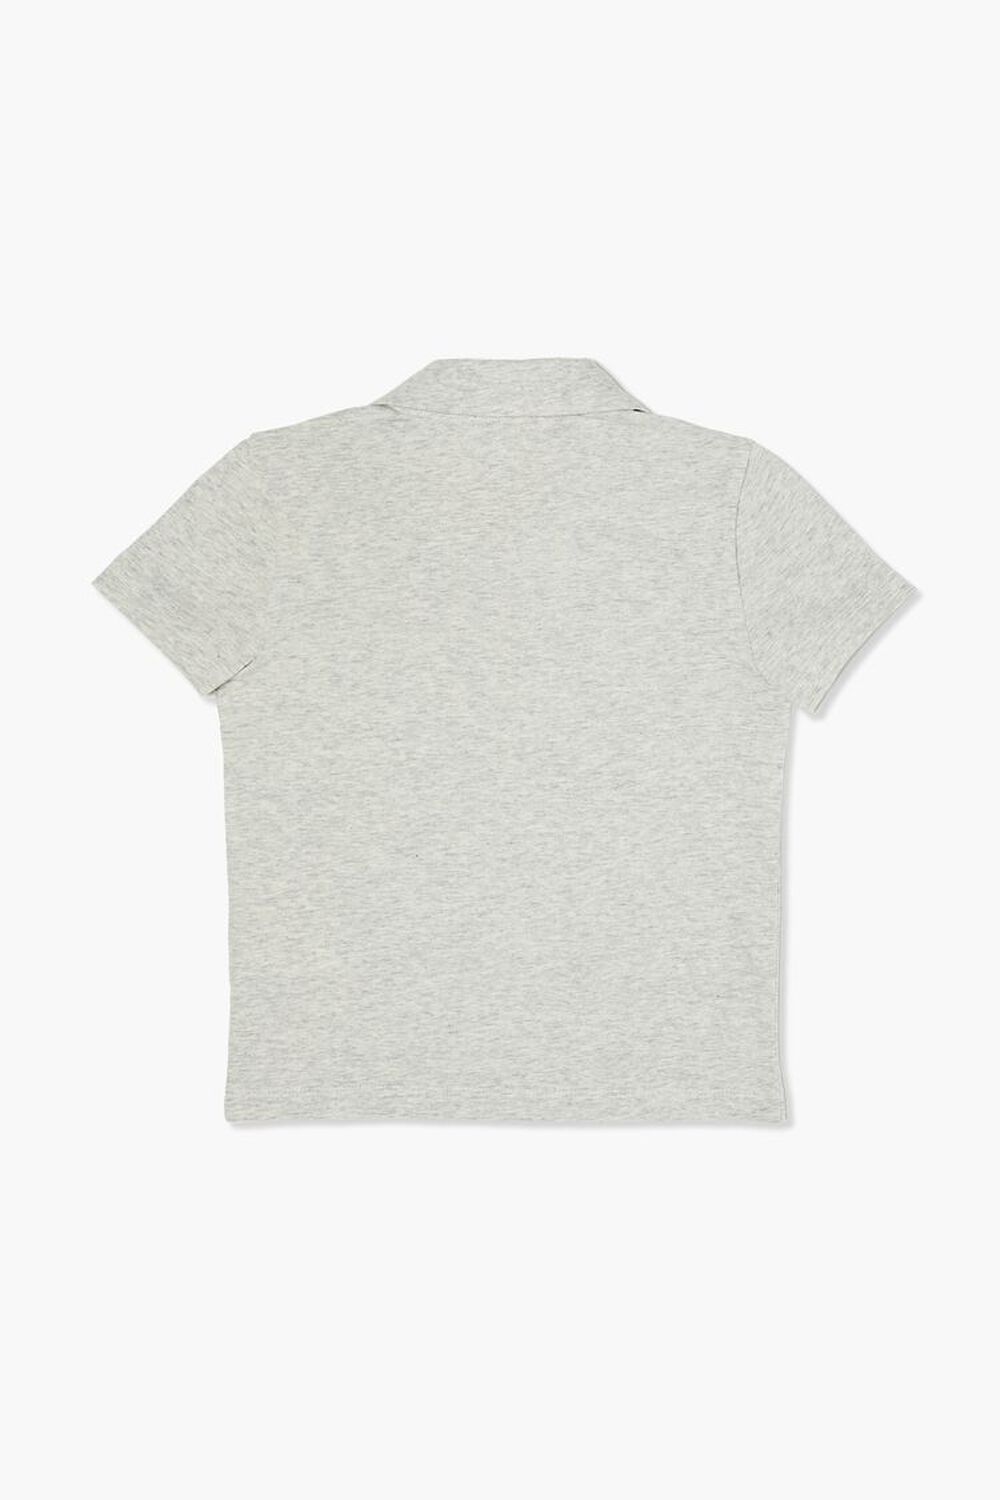 HEATHER GREY Girls Cotton-Blend Polo Shirt (Kids), image 2